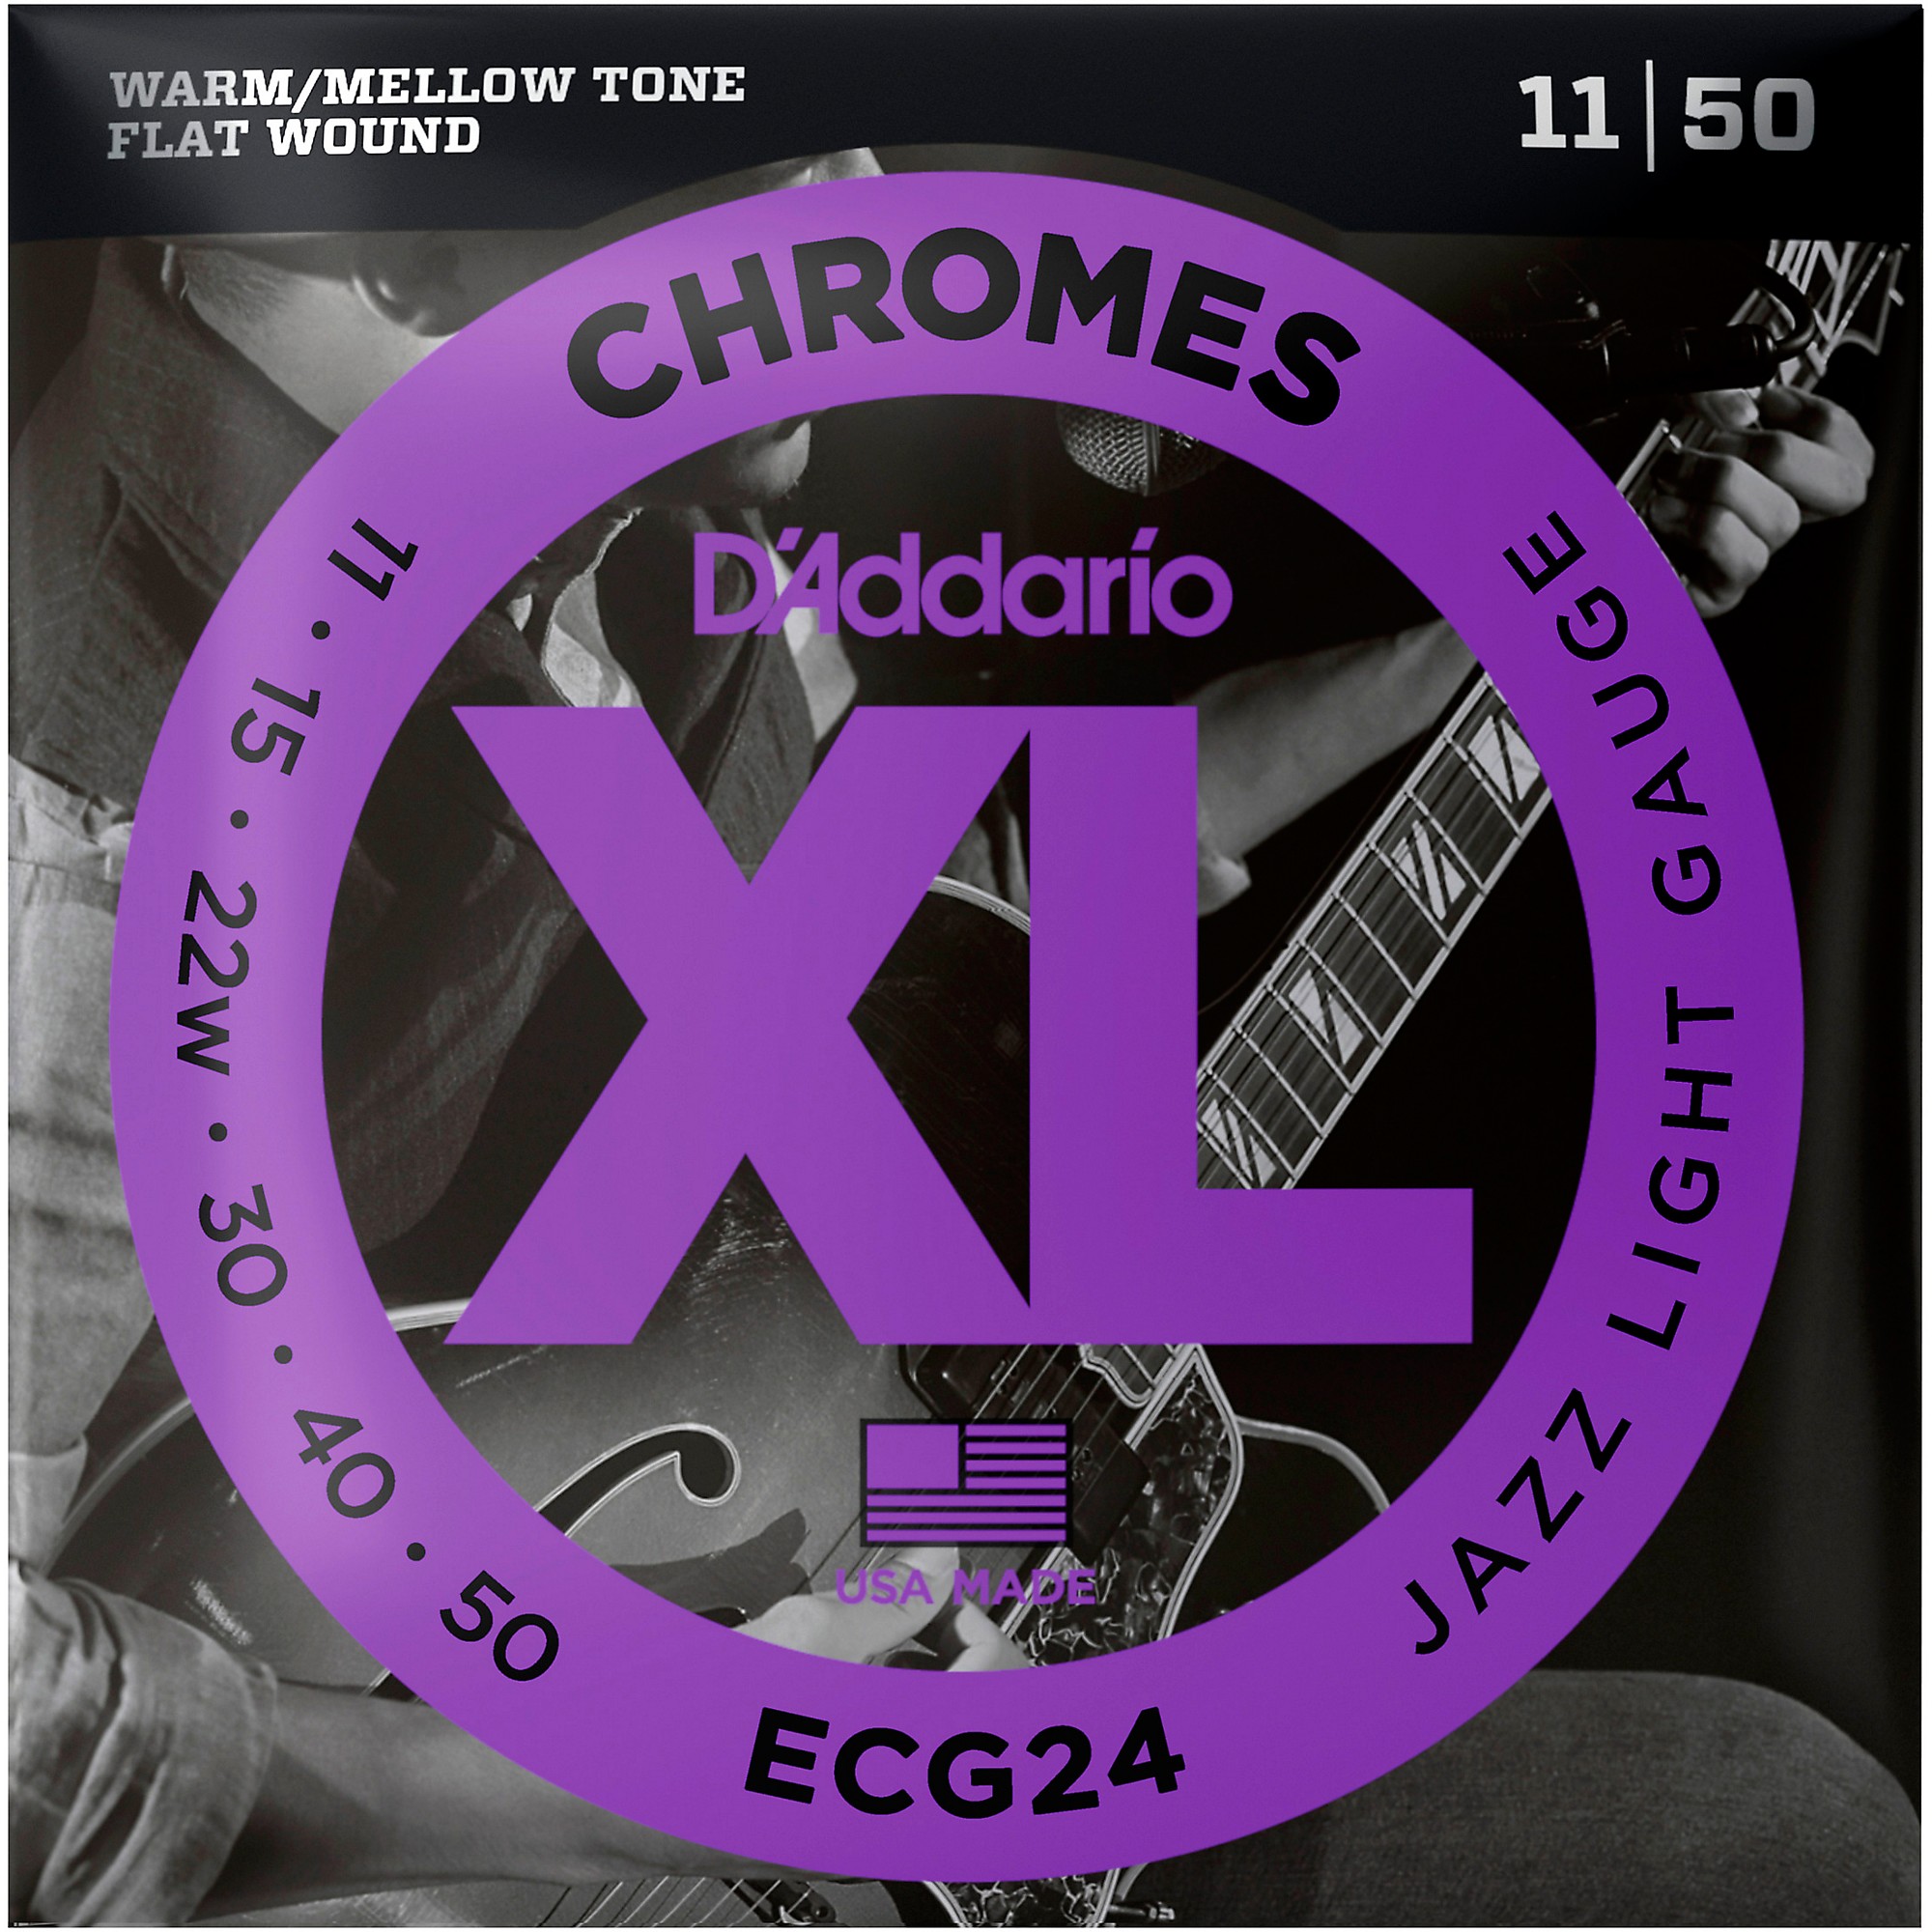 D'Addario XL Chromes Jazz Light Electric Guitar Strings ECG24 